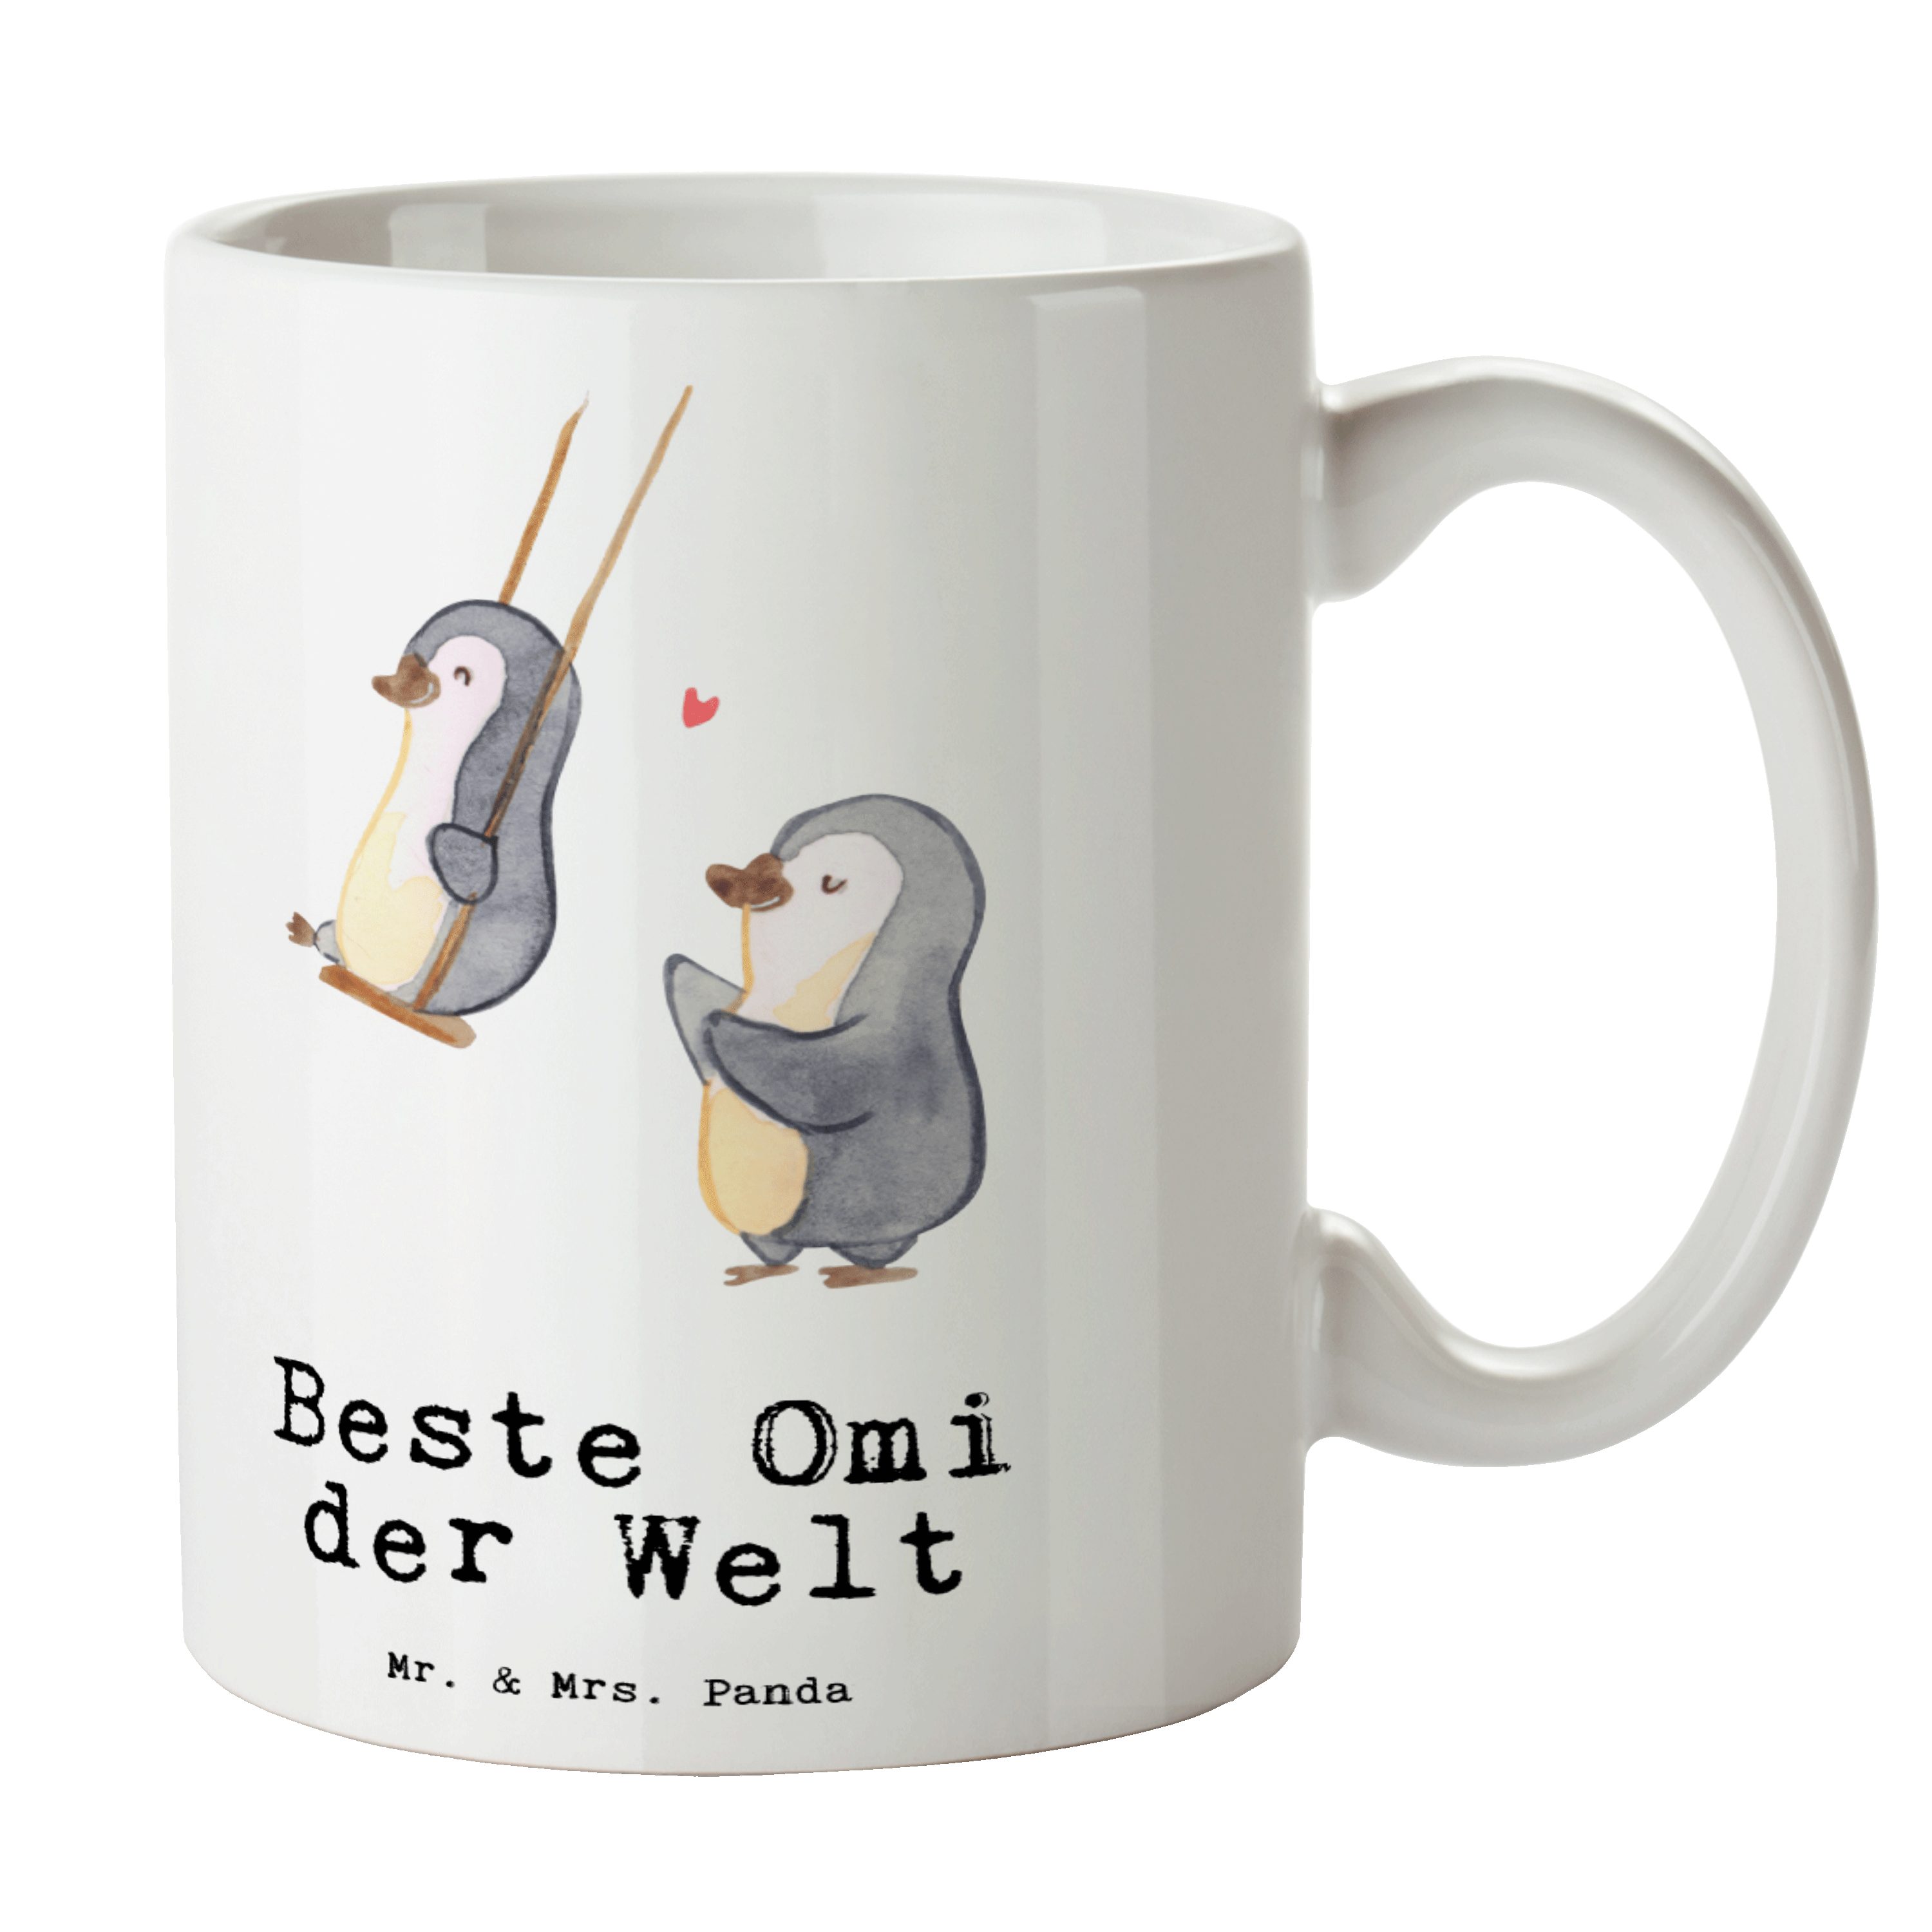 Mr. & Mrs. Panda Tasse Pinguin Beste Omi der Welt - Weiß - Geschenk, Enkelin, Freude machen, Danke, Kaffeetasse, Geschenktipp, Büro, Geburtstagsgeschenk, Mitbringsel, Ommi, Keramik